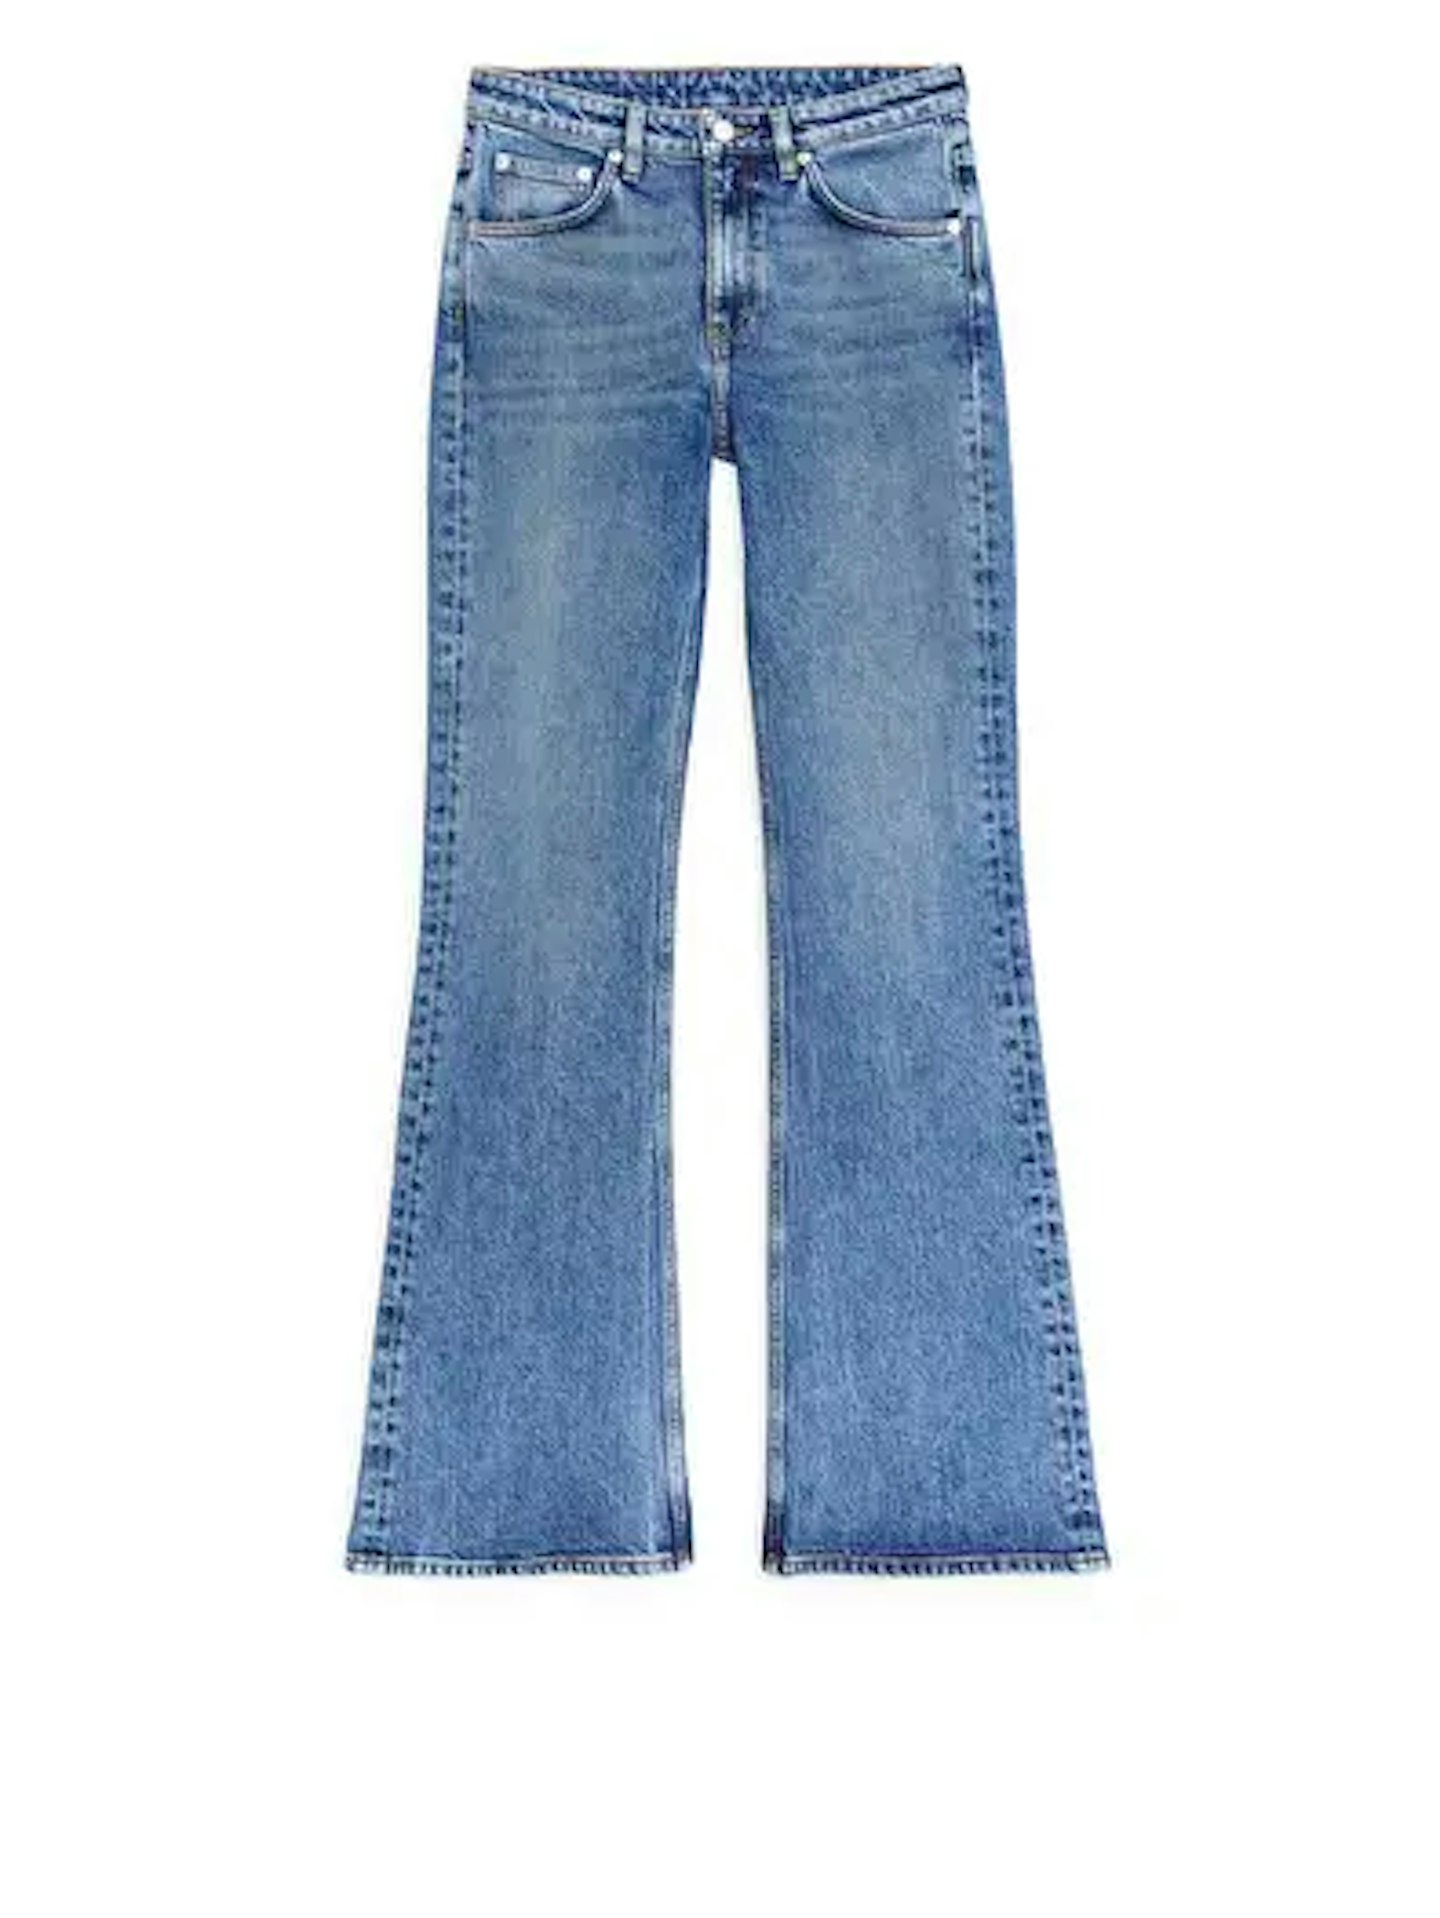 Arket, Bootcut Jeans, £59